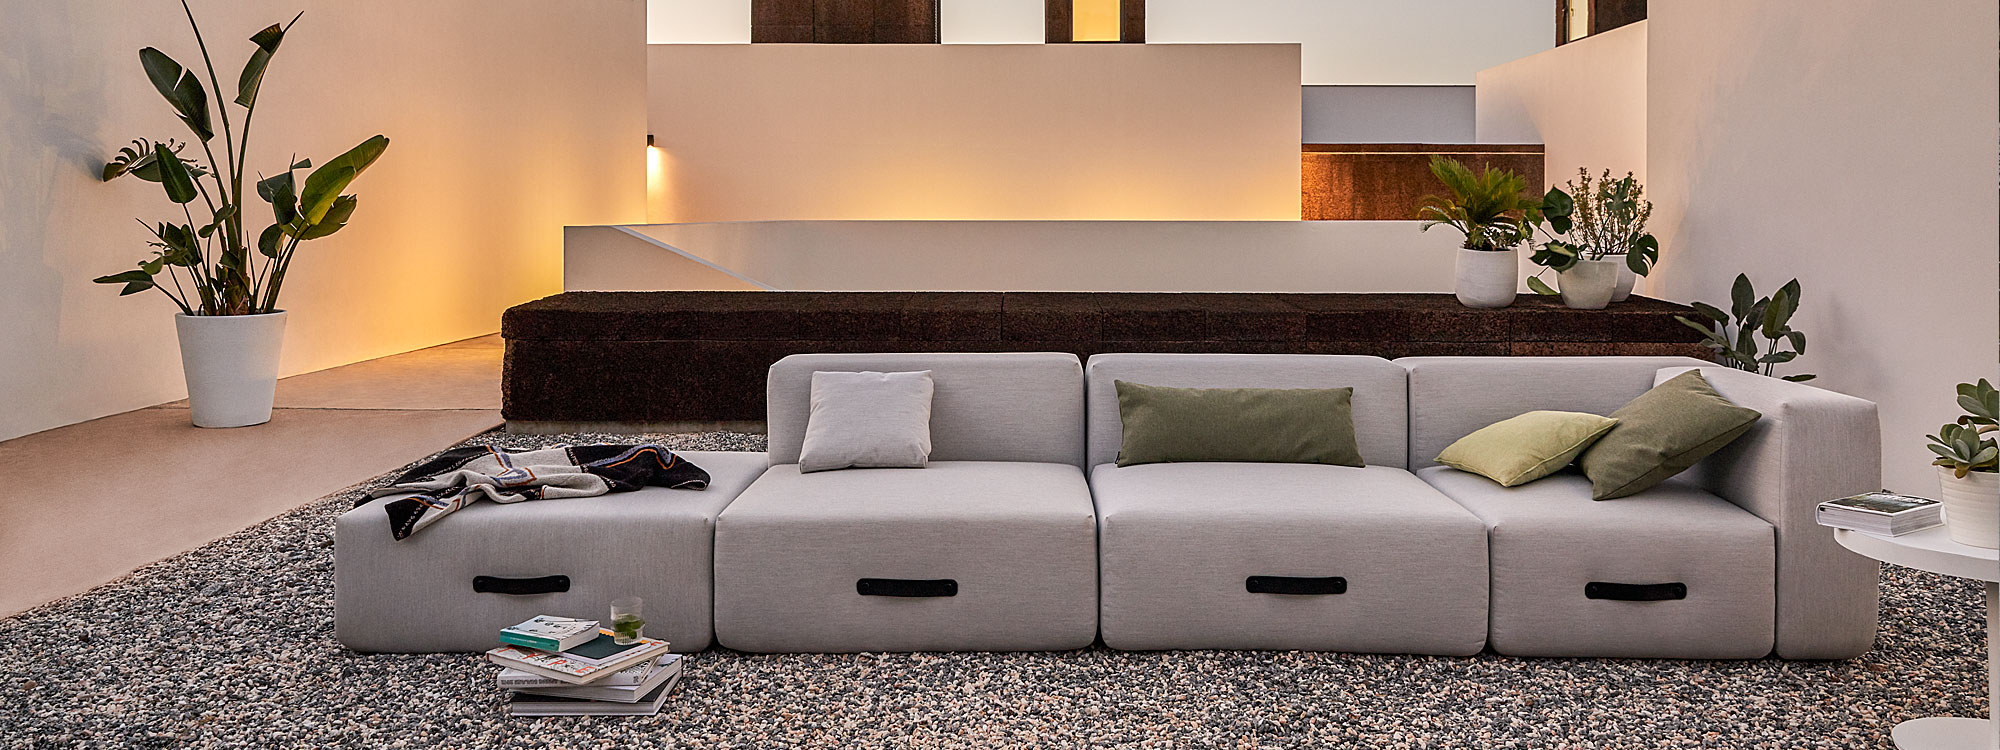 Dusk shot of Miami garden sofa in minimalist Mediterranean courtyard